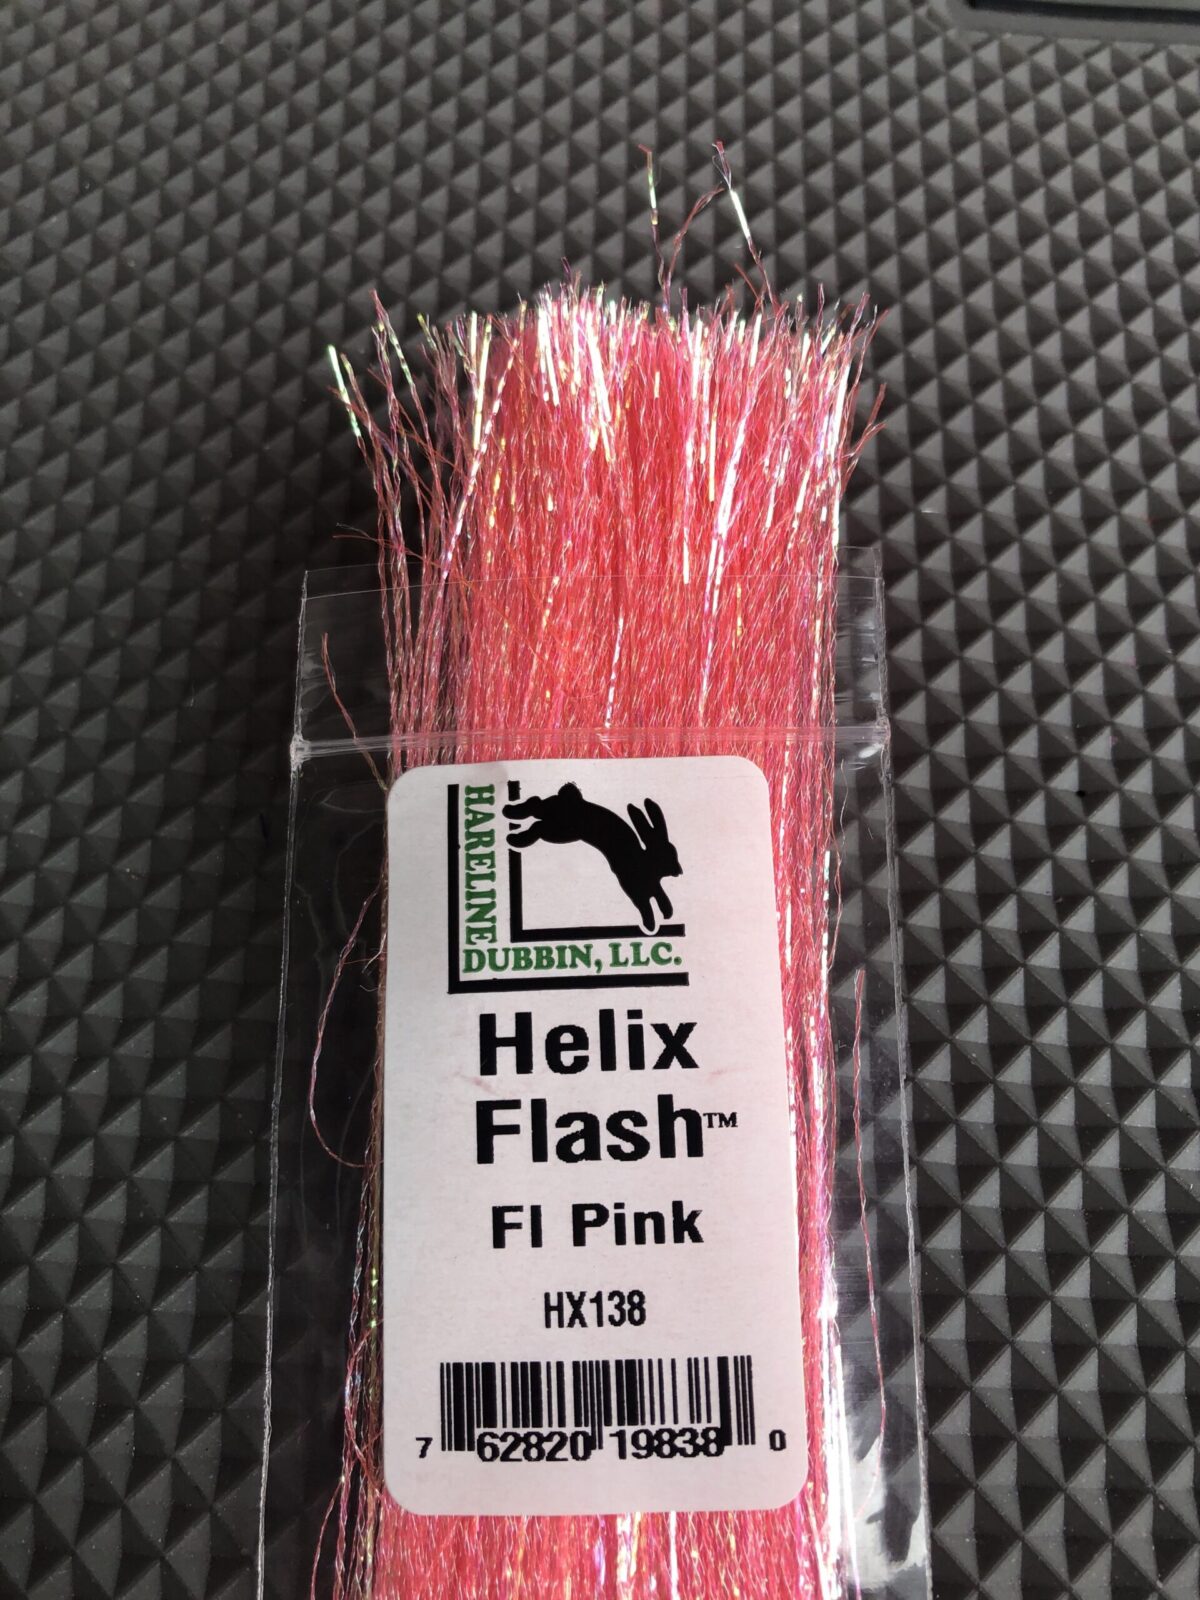 Helix Flash Fl Pink Dinger Jigs e1586115008130 scaled 1200x1600 - Krystal Flash & Helix Flash